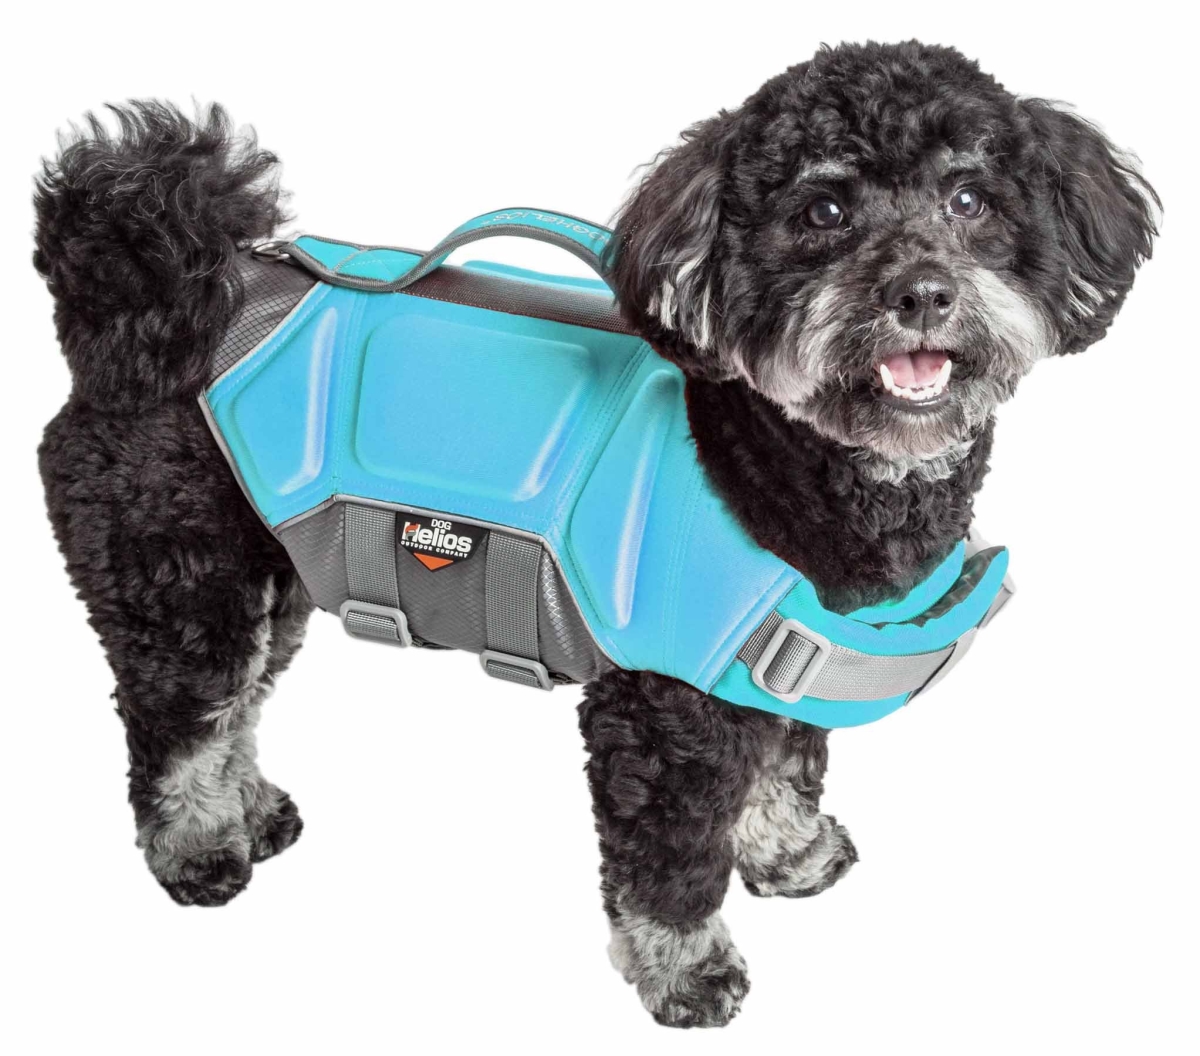 Picture of Dog Helios HA18LBLG Tidal Guard Multi-Point Strategically-Stitched Reflective Pet Dog Life Jacket Vest - Light Blue, Large